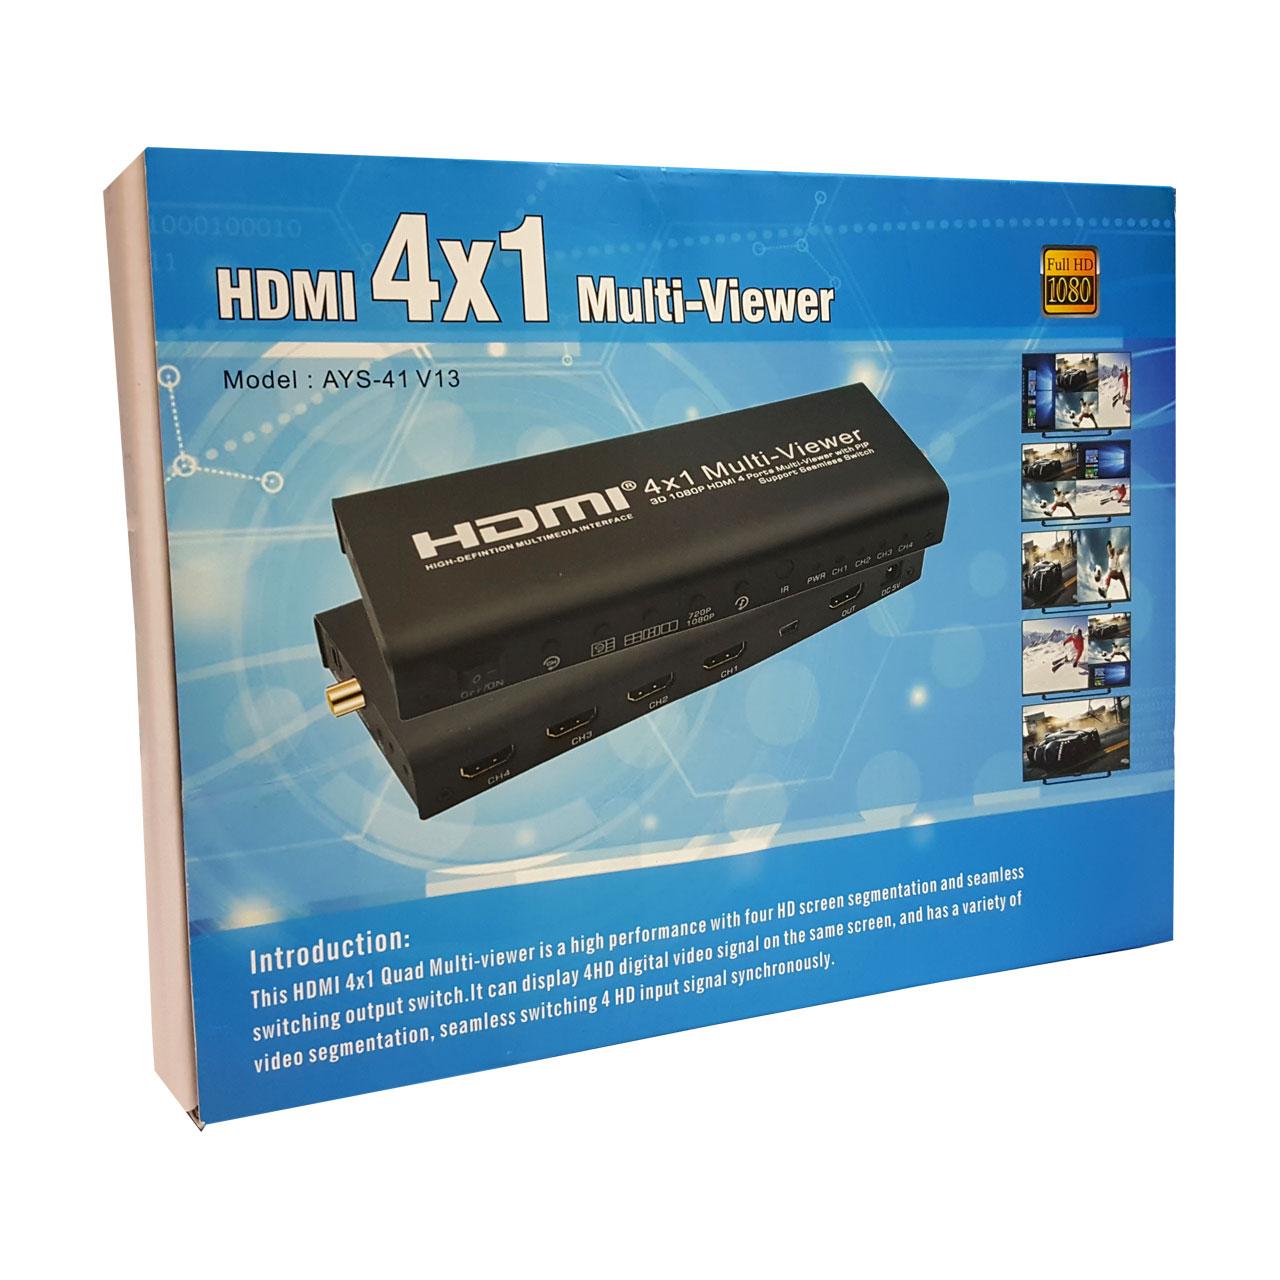 HDMI 4x1 Mulit-Viewer